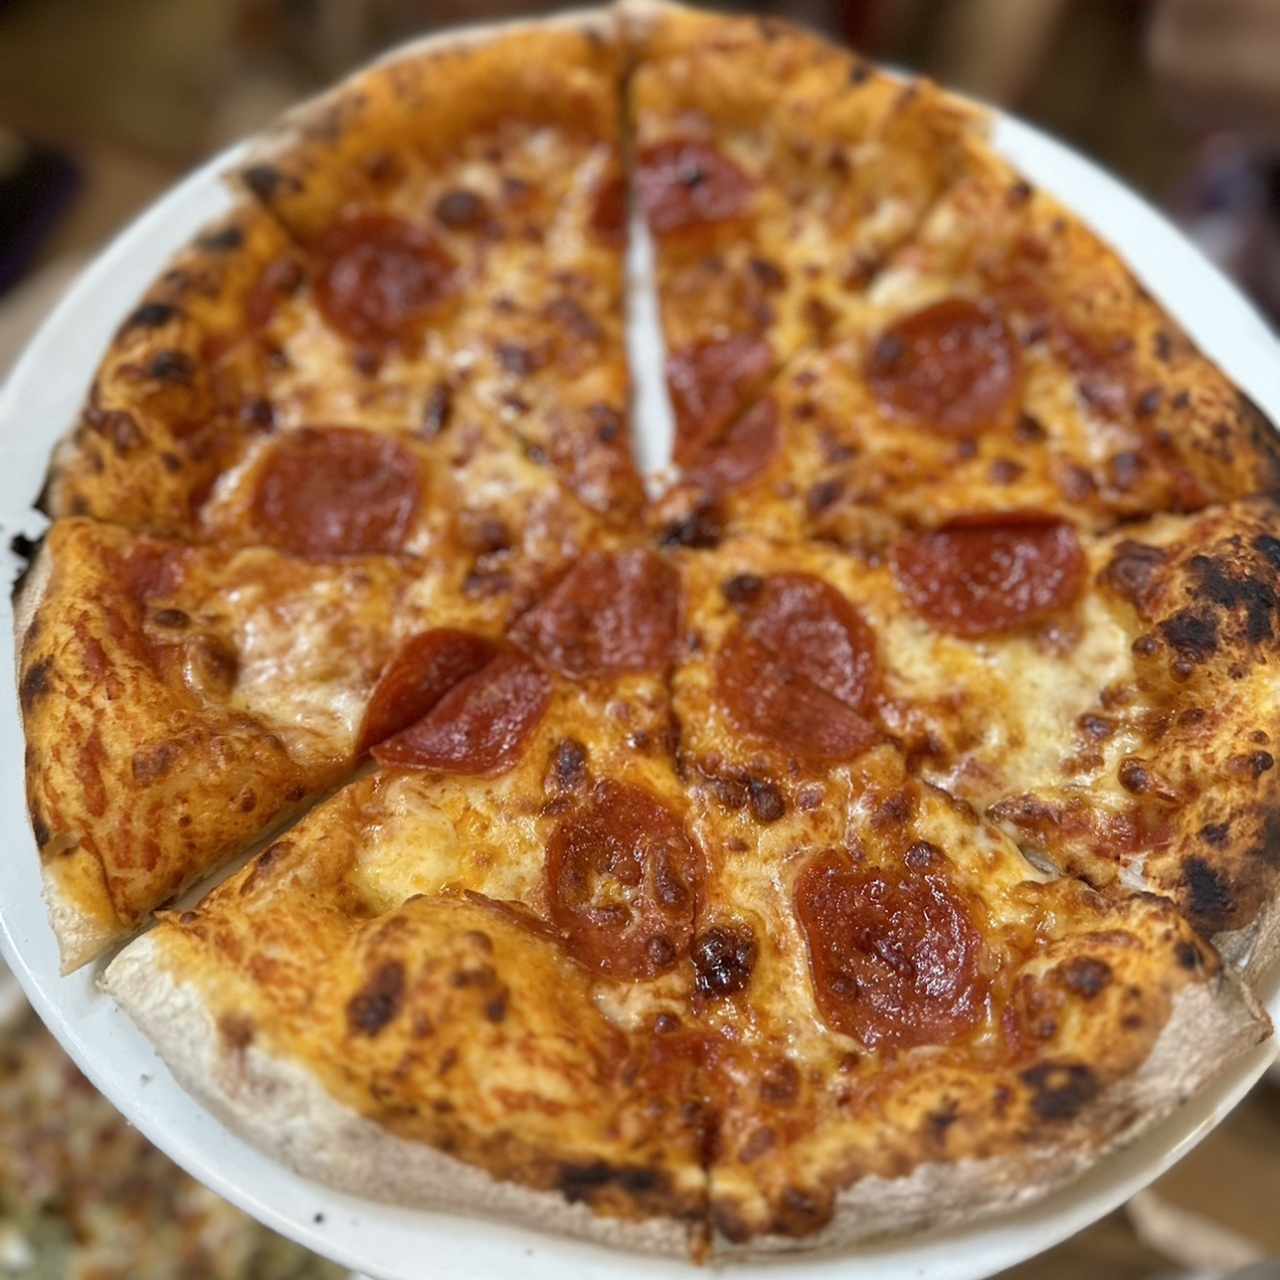 Pizza Pepperoni